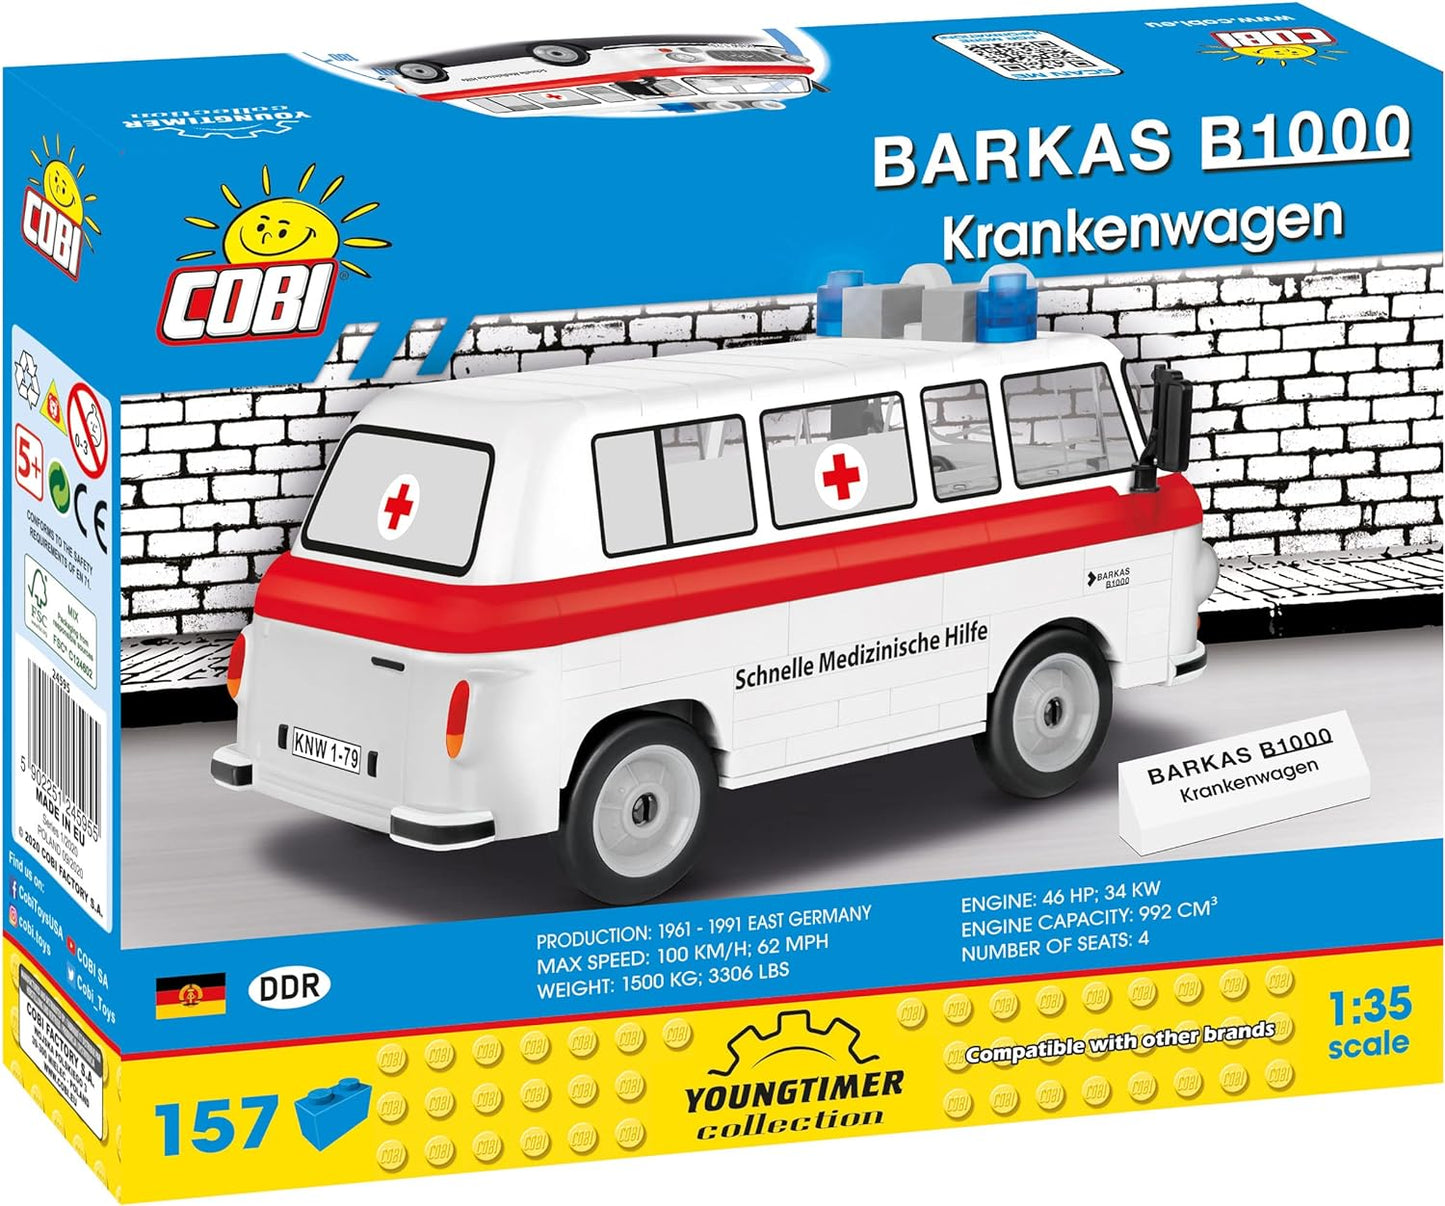 COBI Barkas B1000 Krankenwagen 24595 Klemmbaustein Set